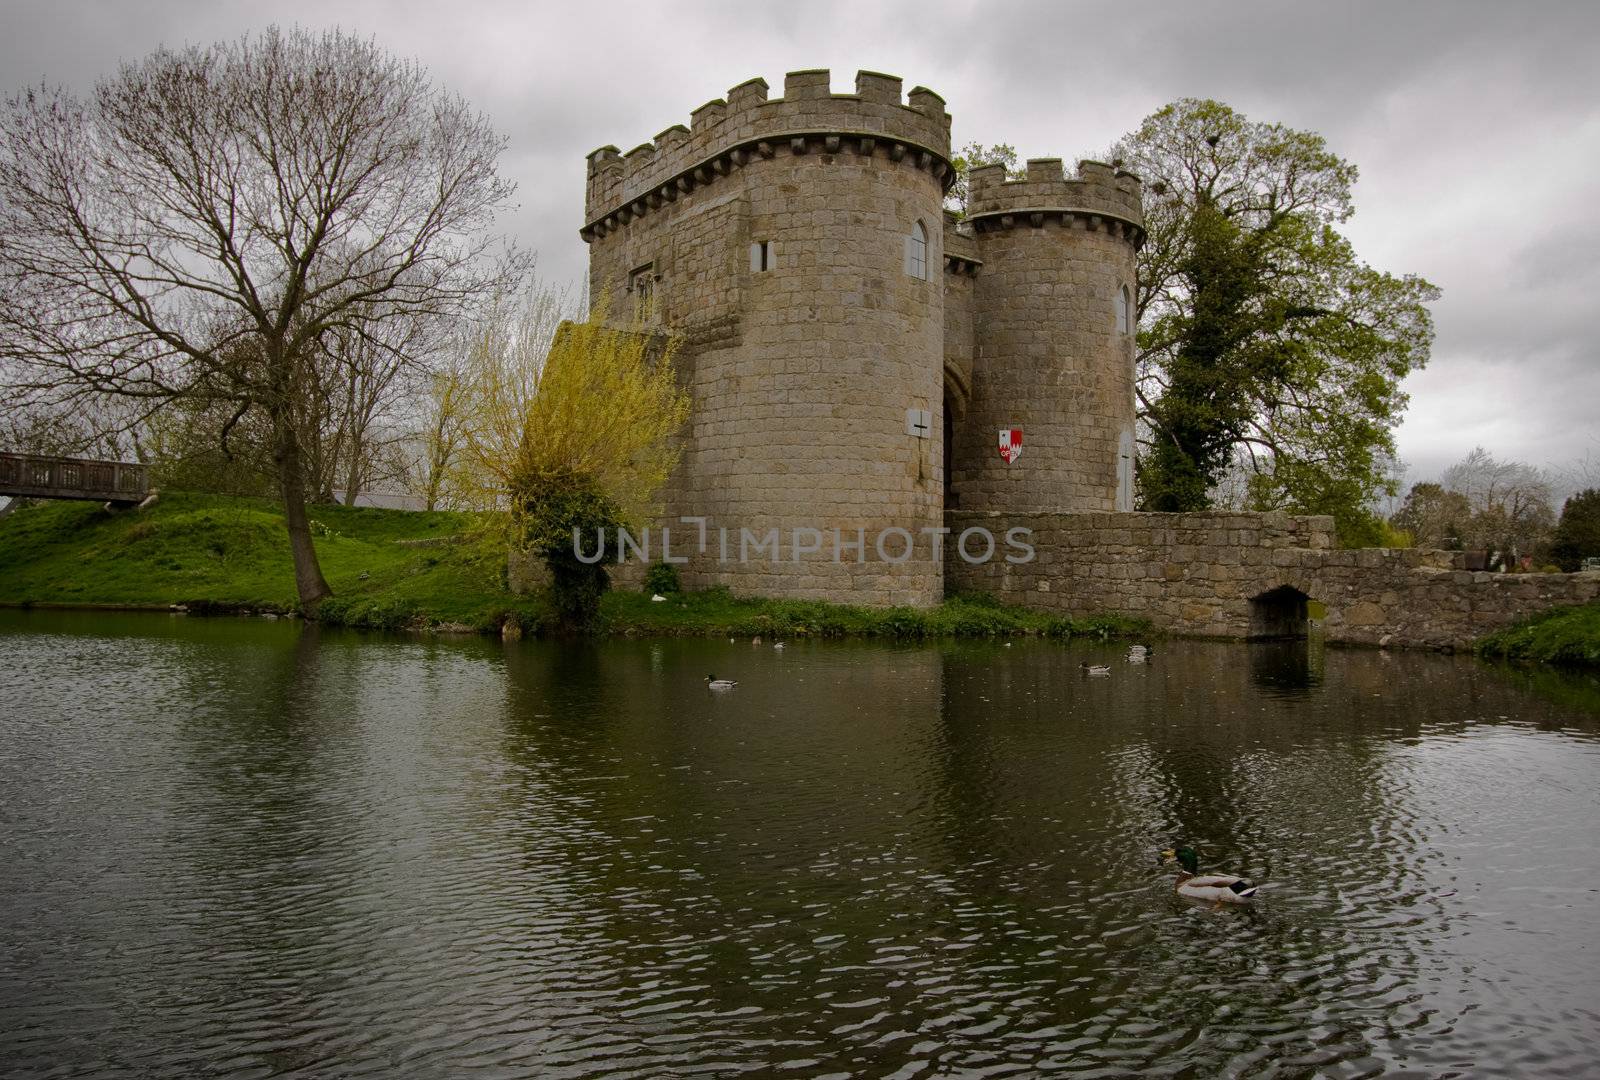 Whittington Castle Reflection by steheap